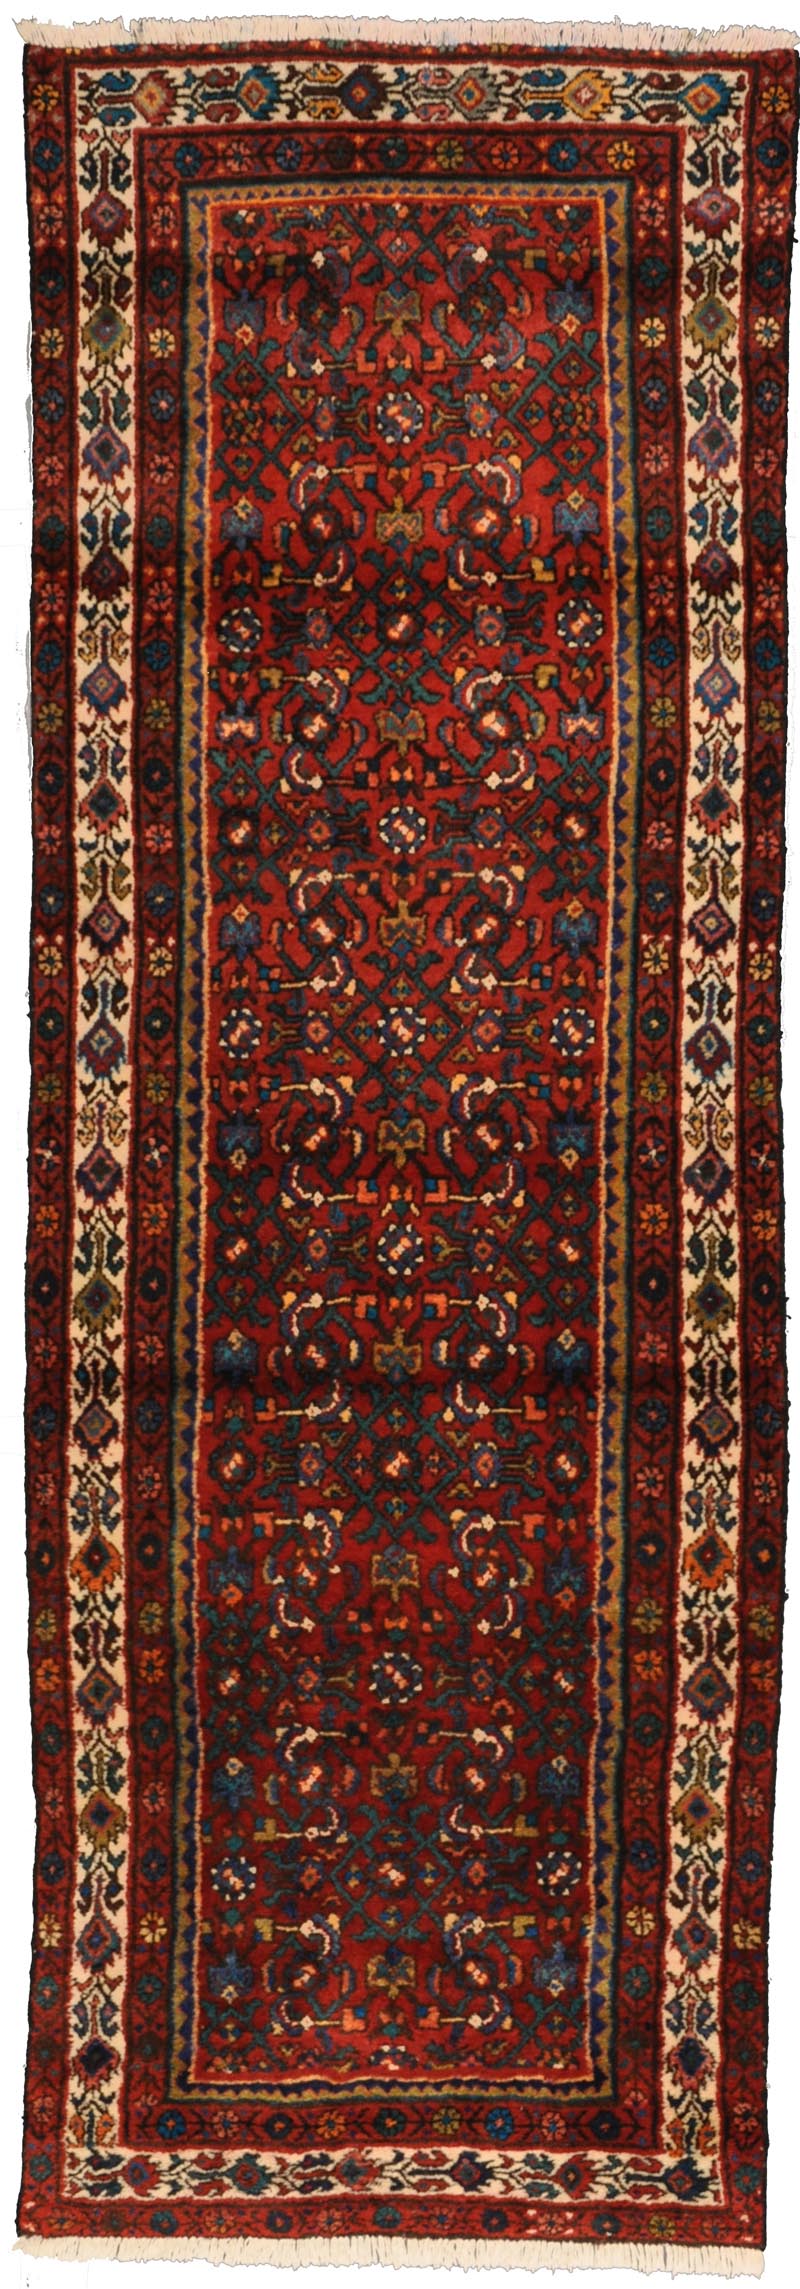 handmade persian rug handknotted vintage antique runner rug red and beige persian hamadan online rug store refined carpet rugs orange county rug carpet store